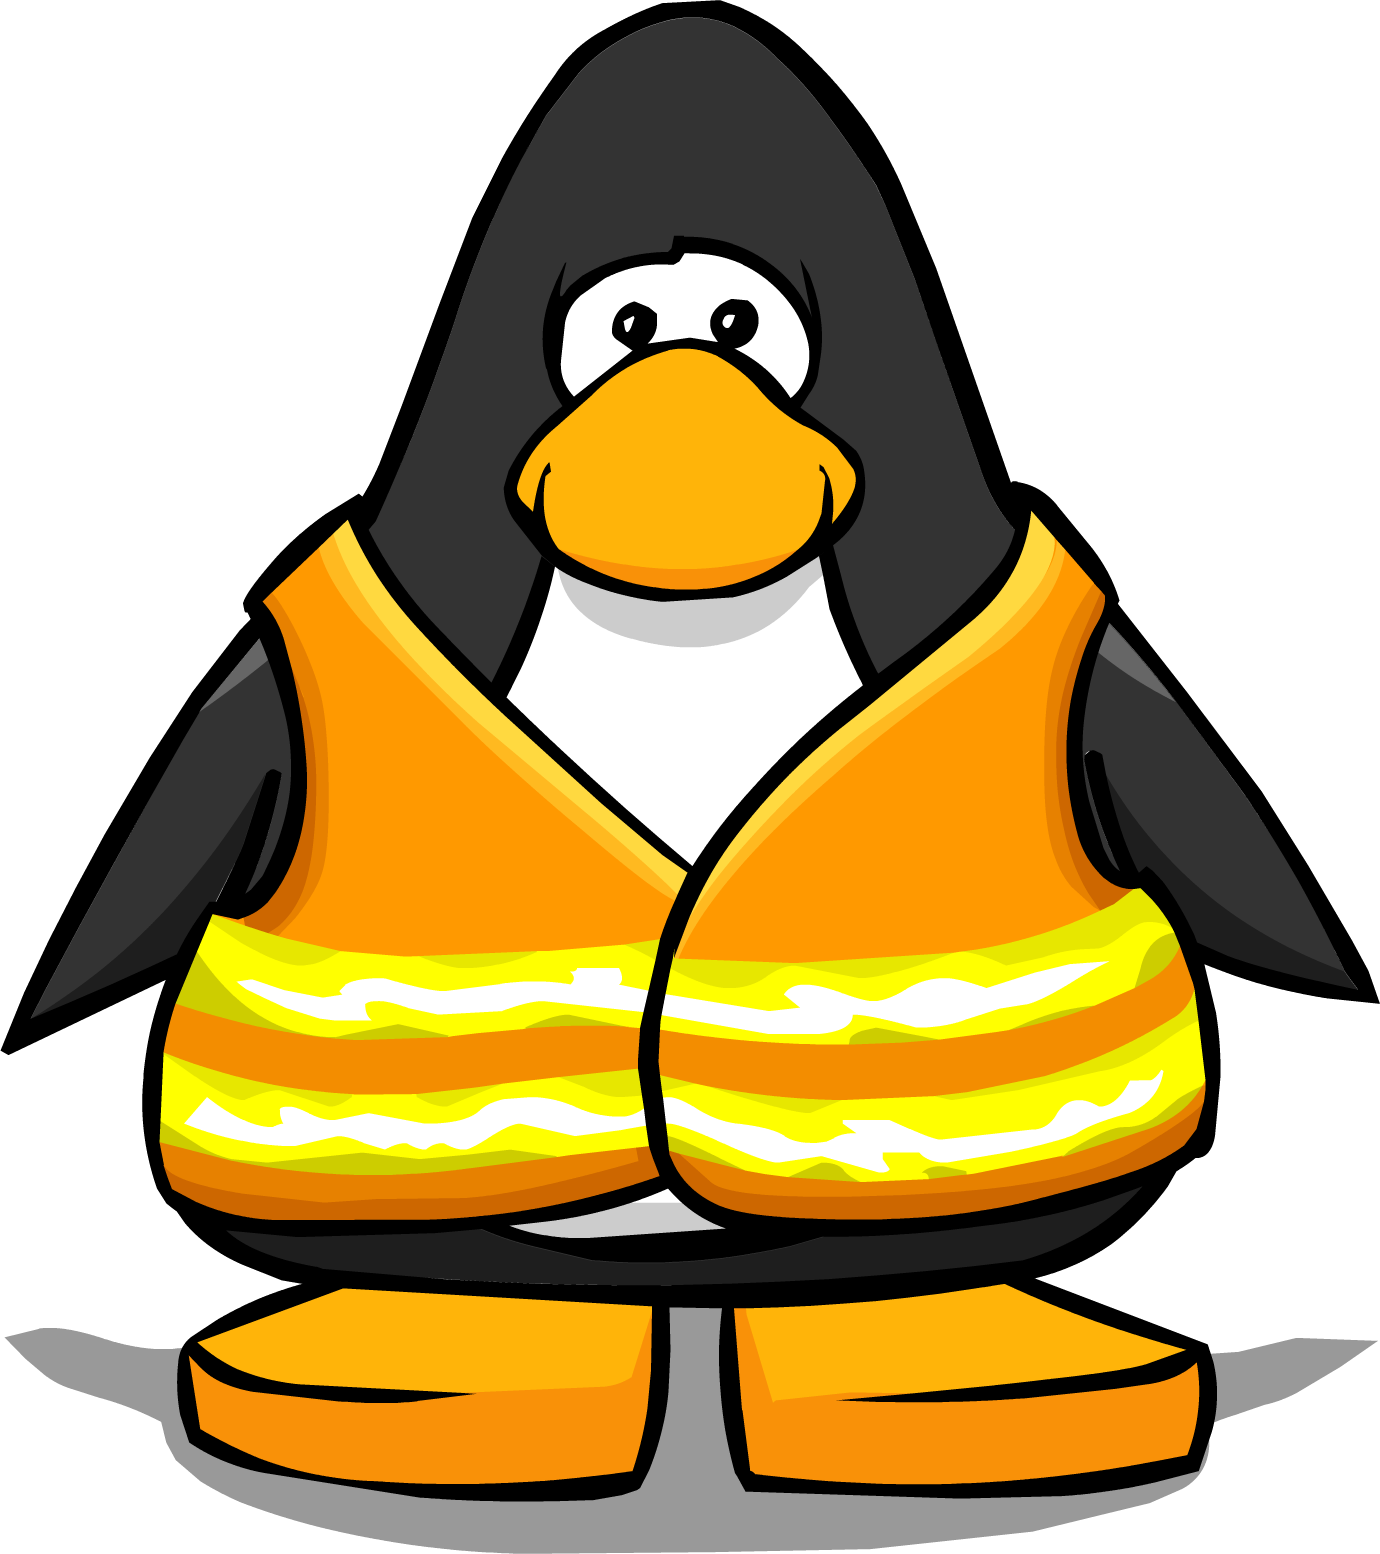 penguins clipart orange